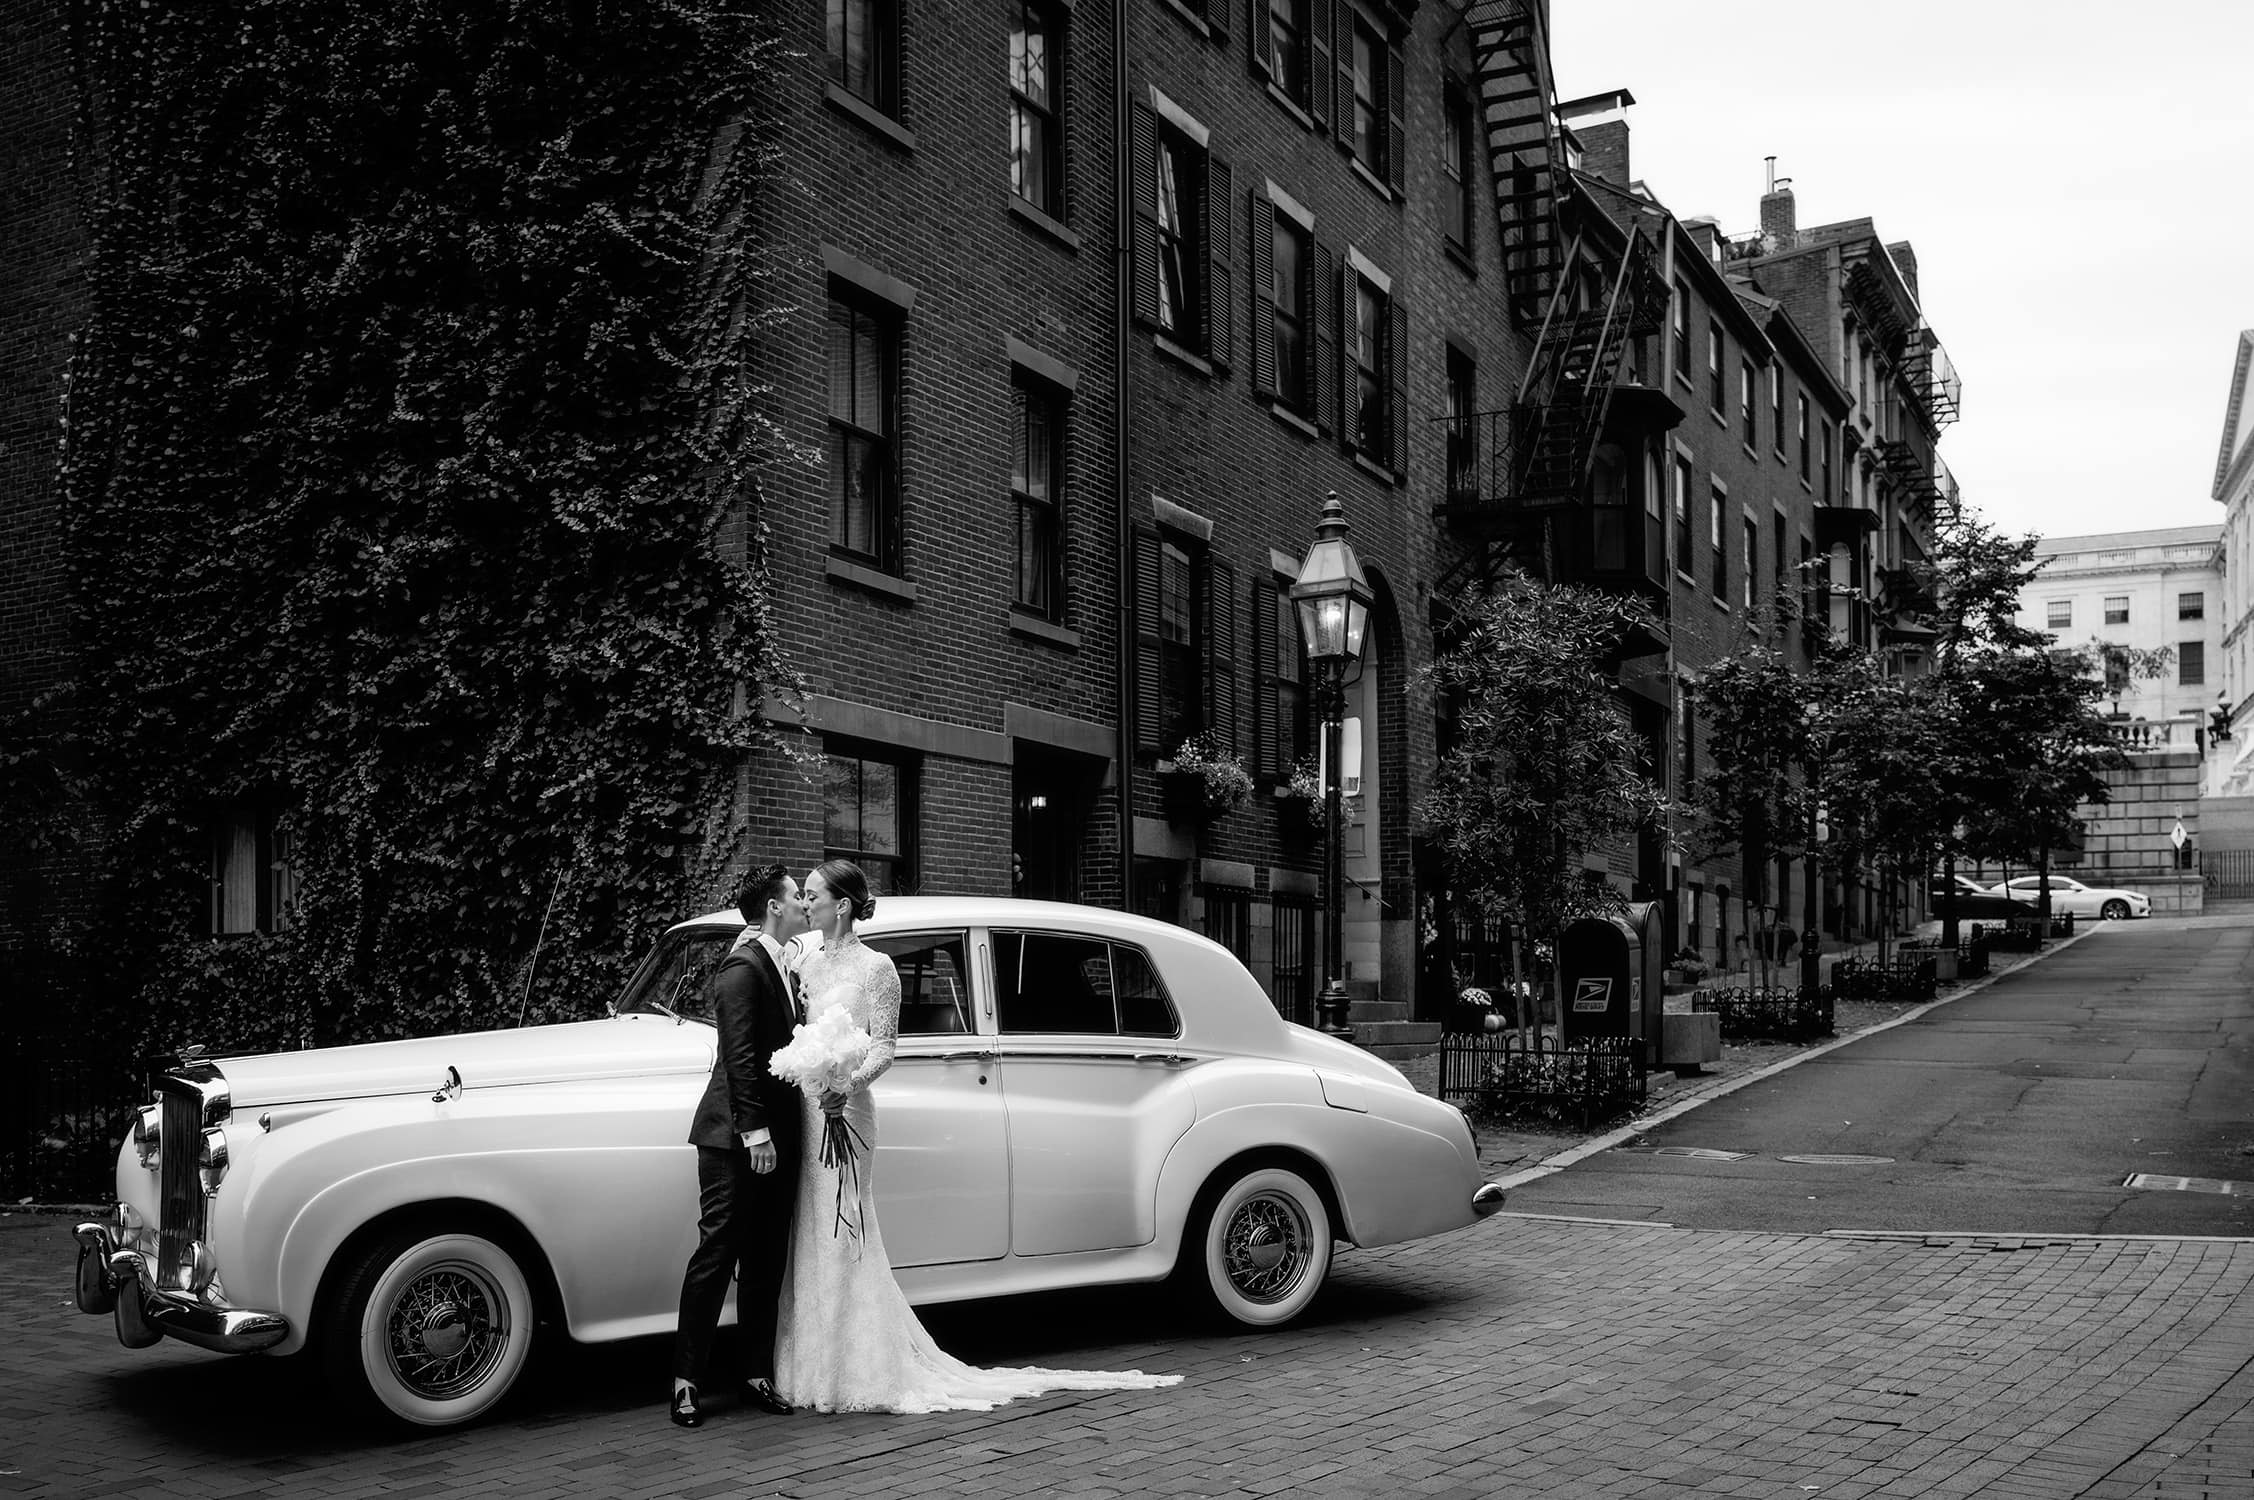 Boston Public Library Wedding – Courtyard & Bates Hall: Angela & Eleanor